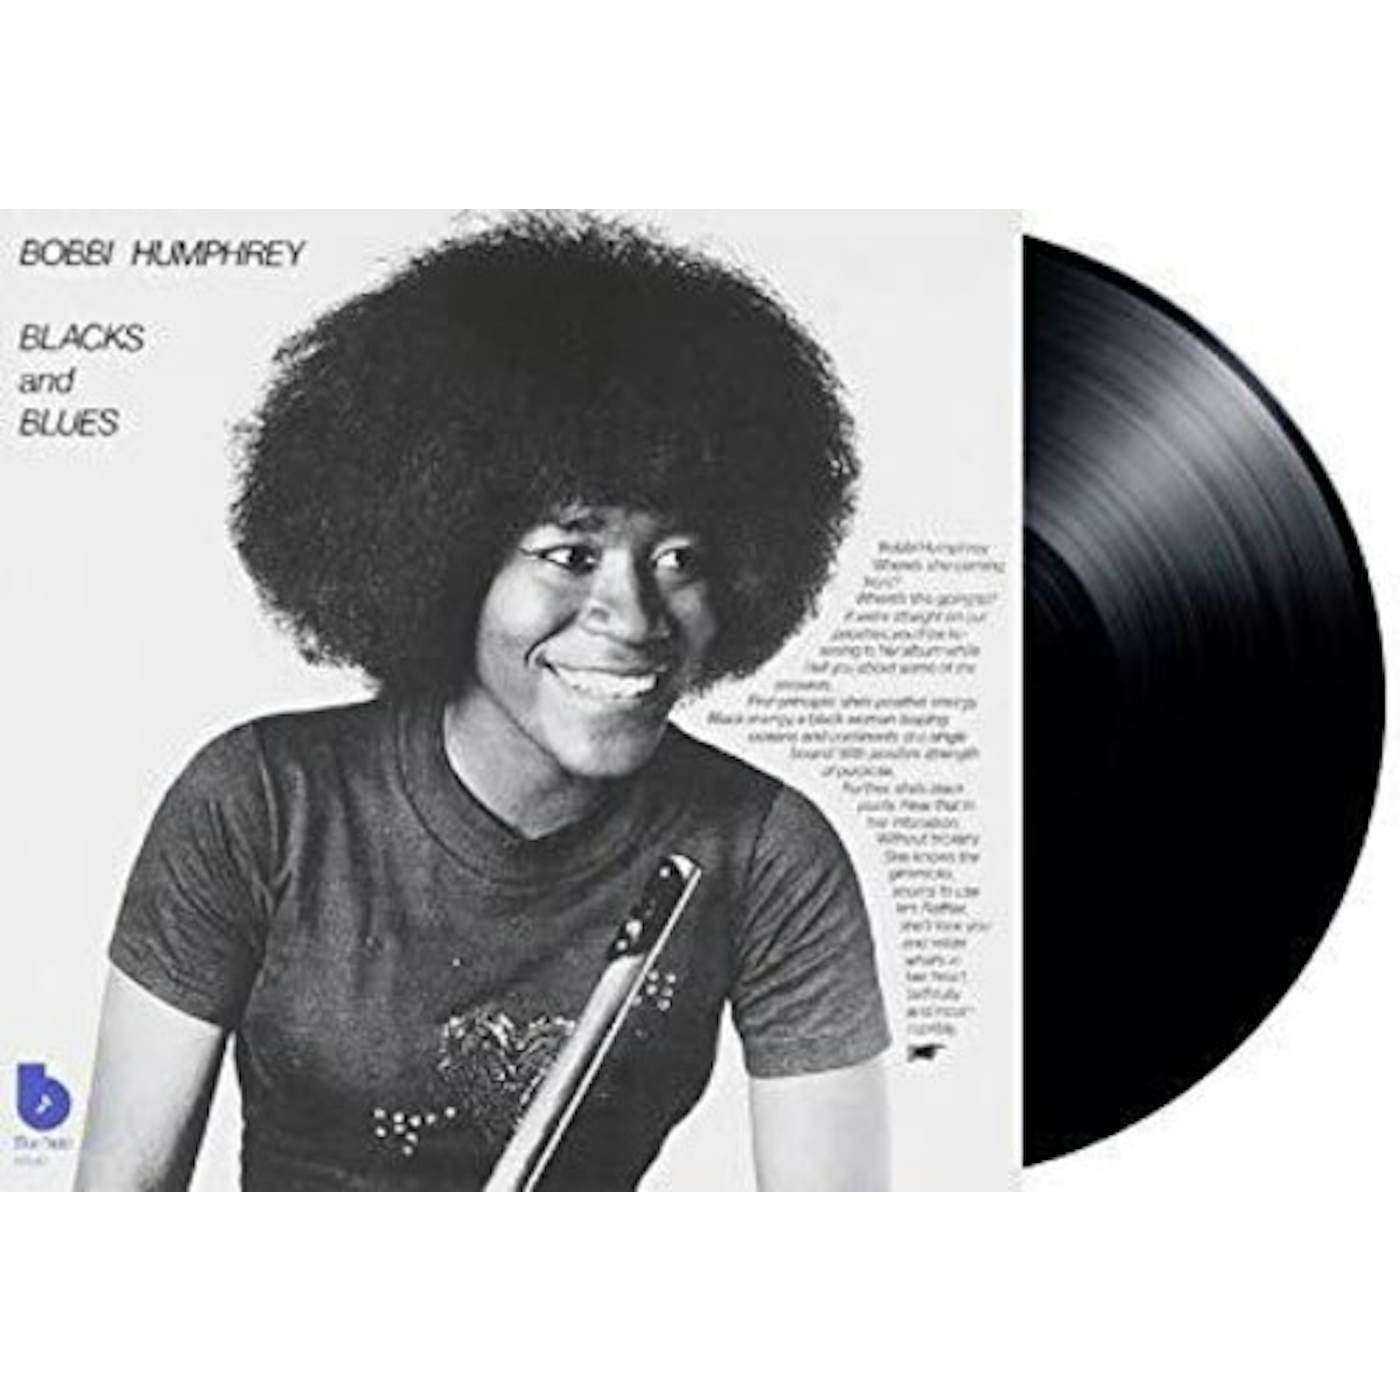 Bobbi Humphrey Blacks And Blues Vinyl Record